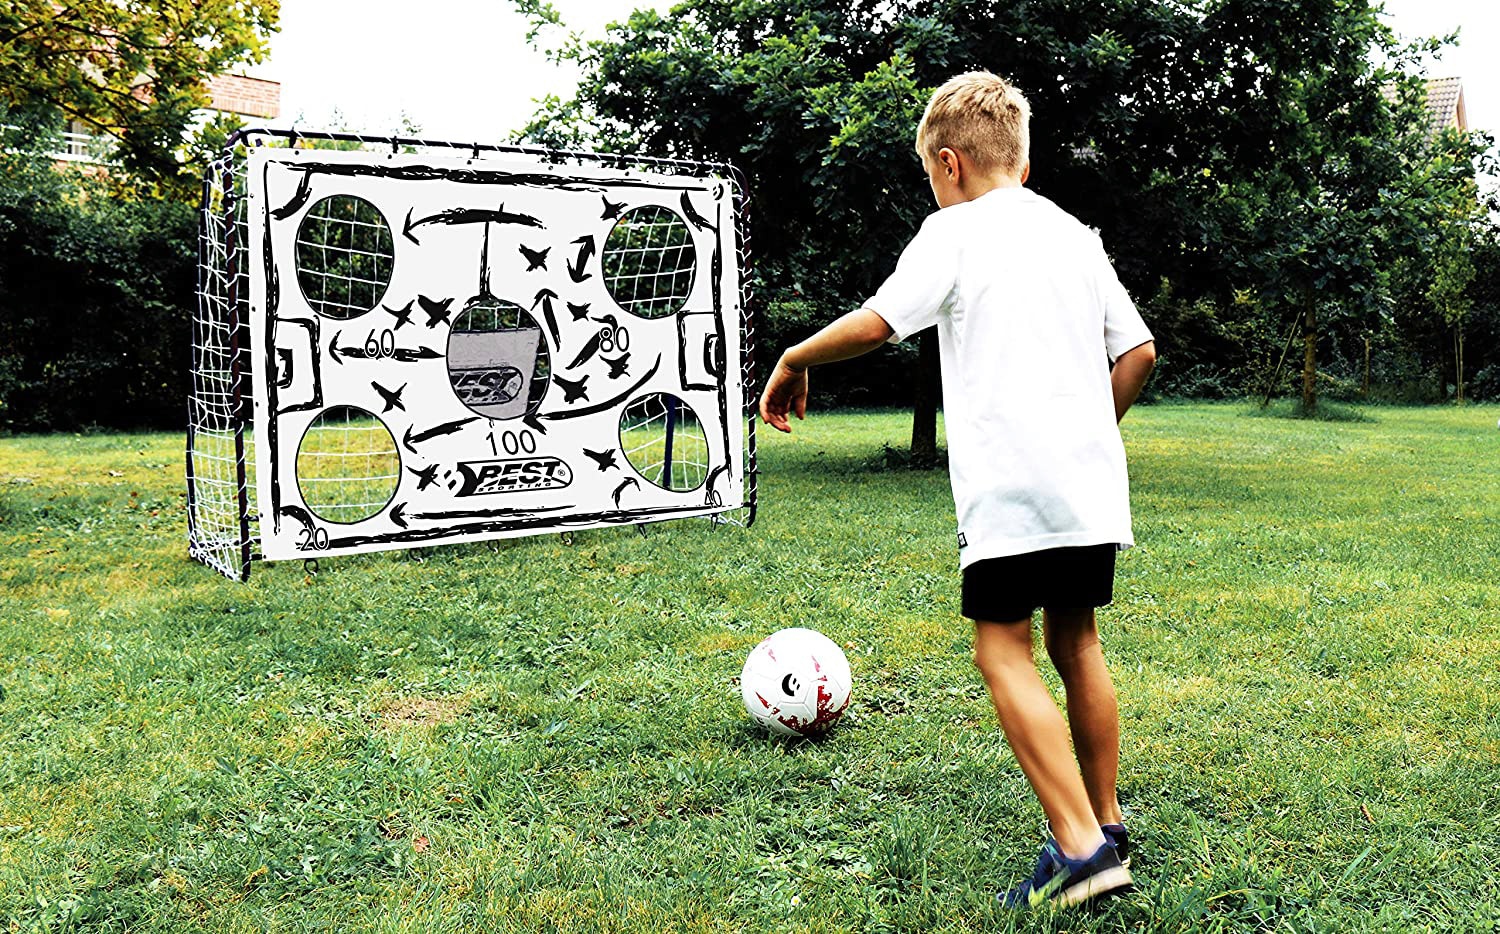 Hudora Fußballtor »TAKTIK«, BxLxH: 76x213x152 cm, mit Torwand